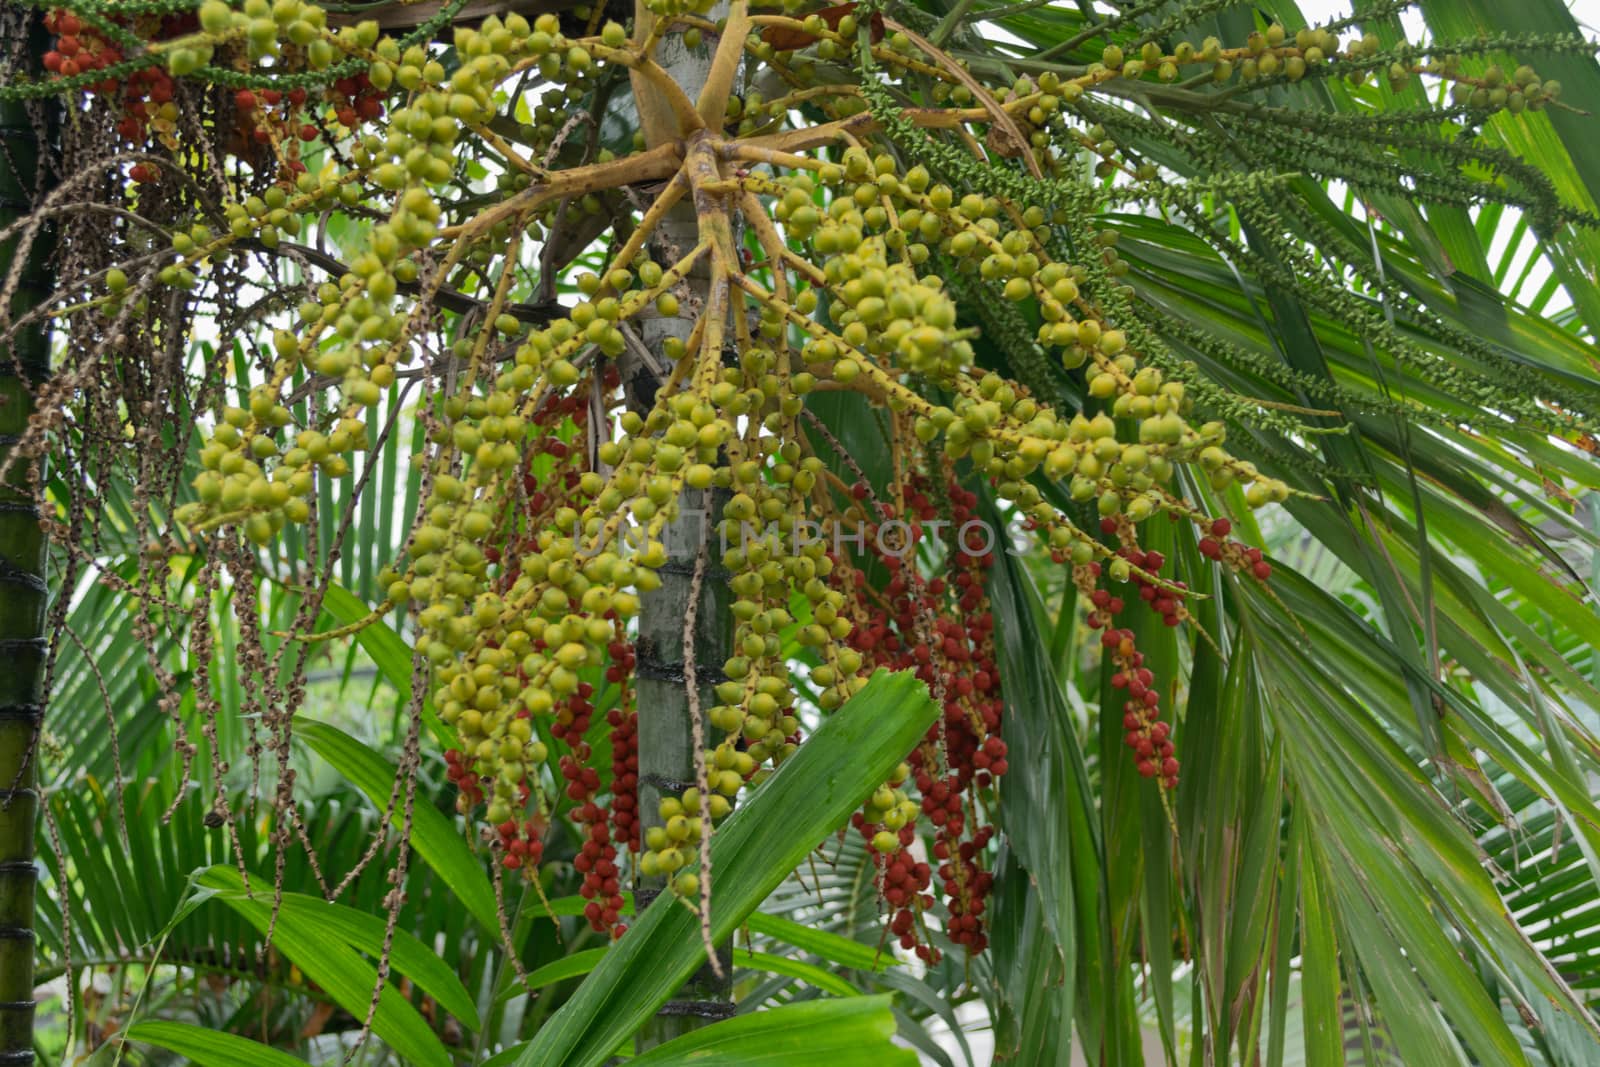 Areca nut of tropical palm tree